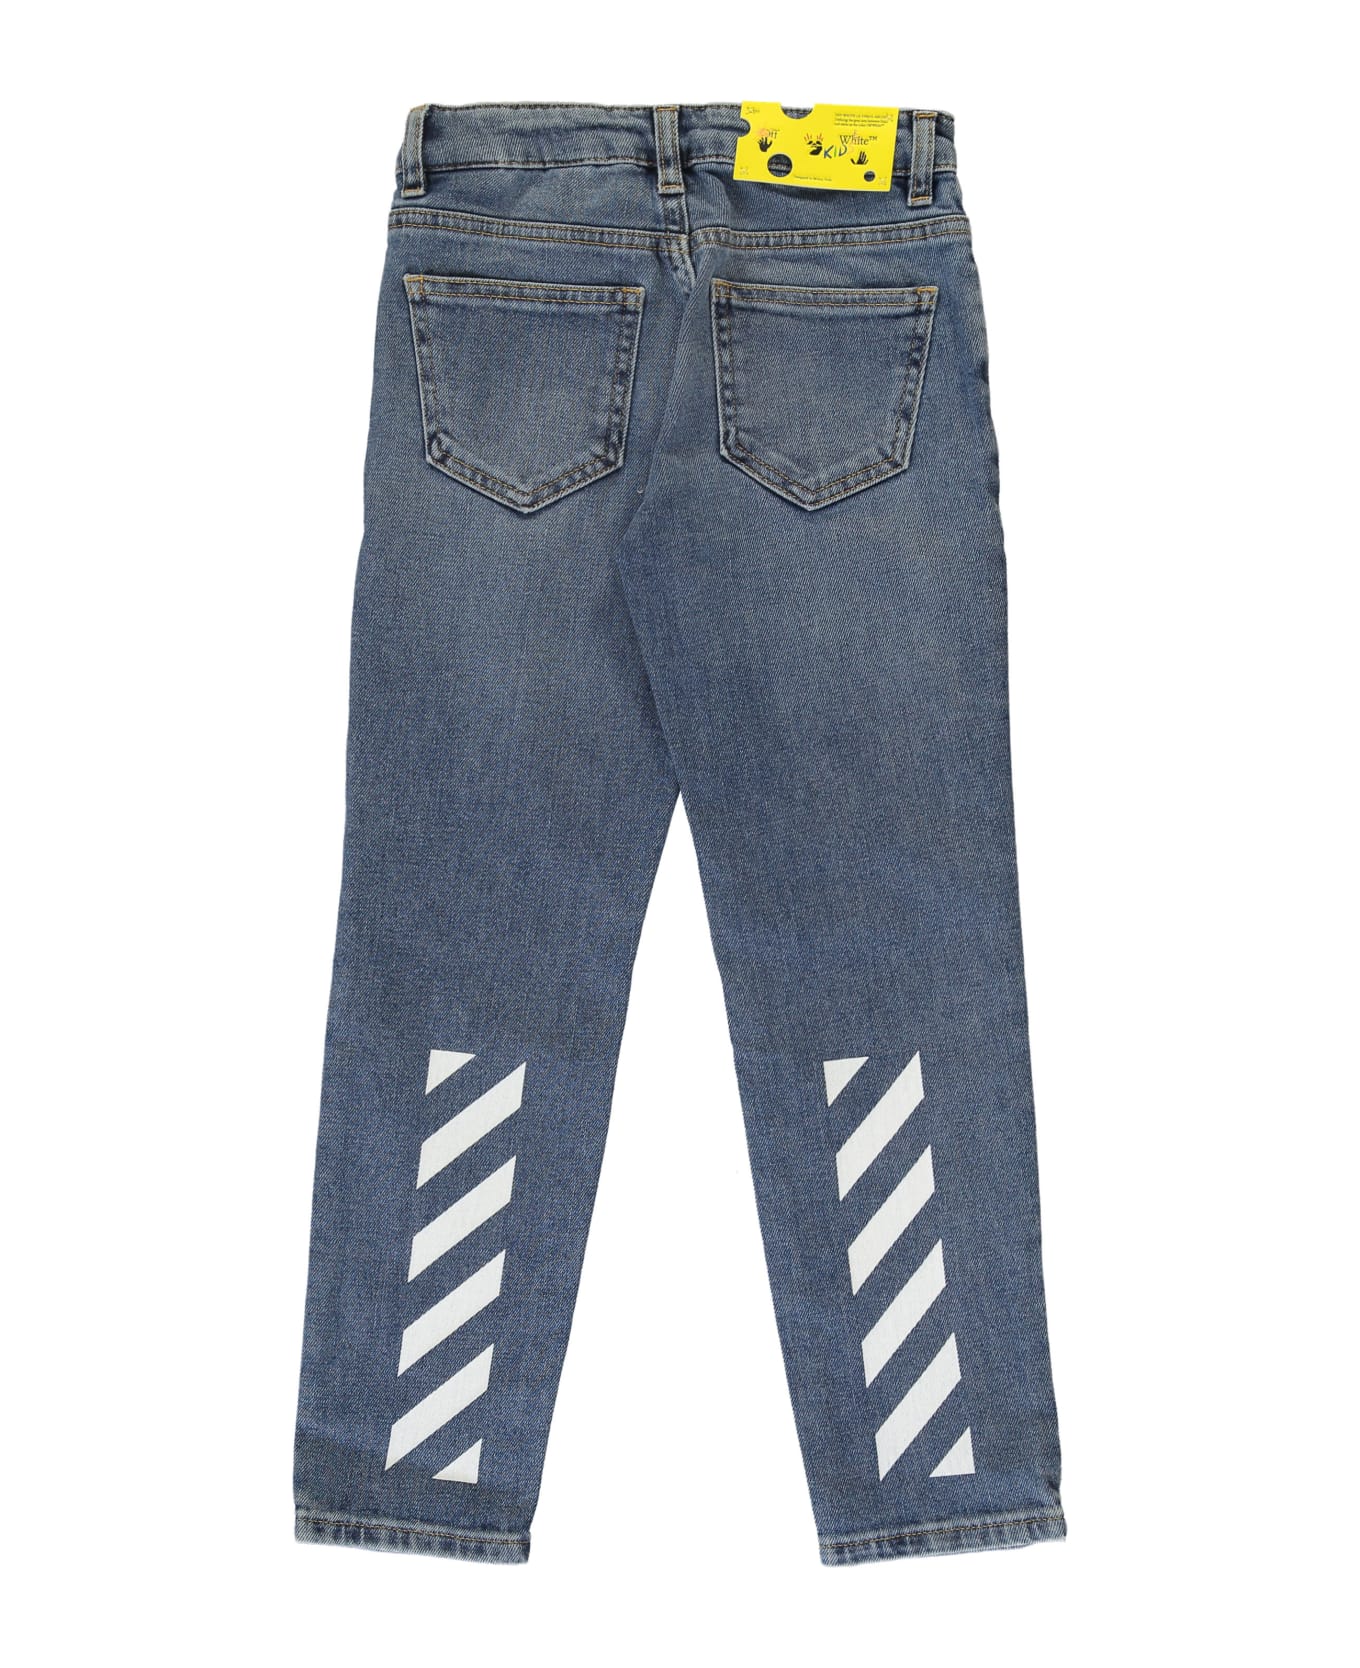 Off-White 5-pocket Jeans - blue ボトムス